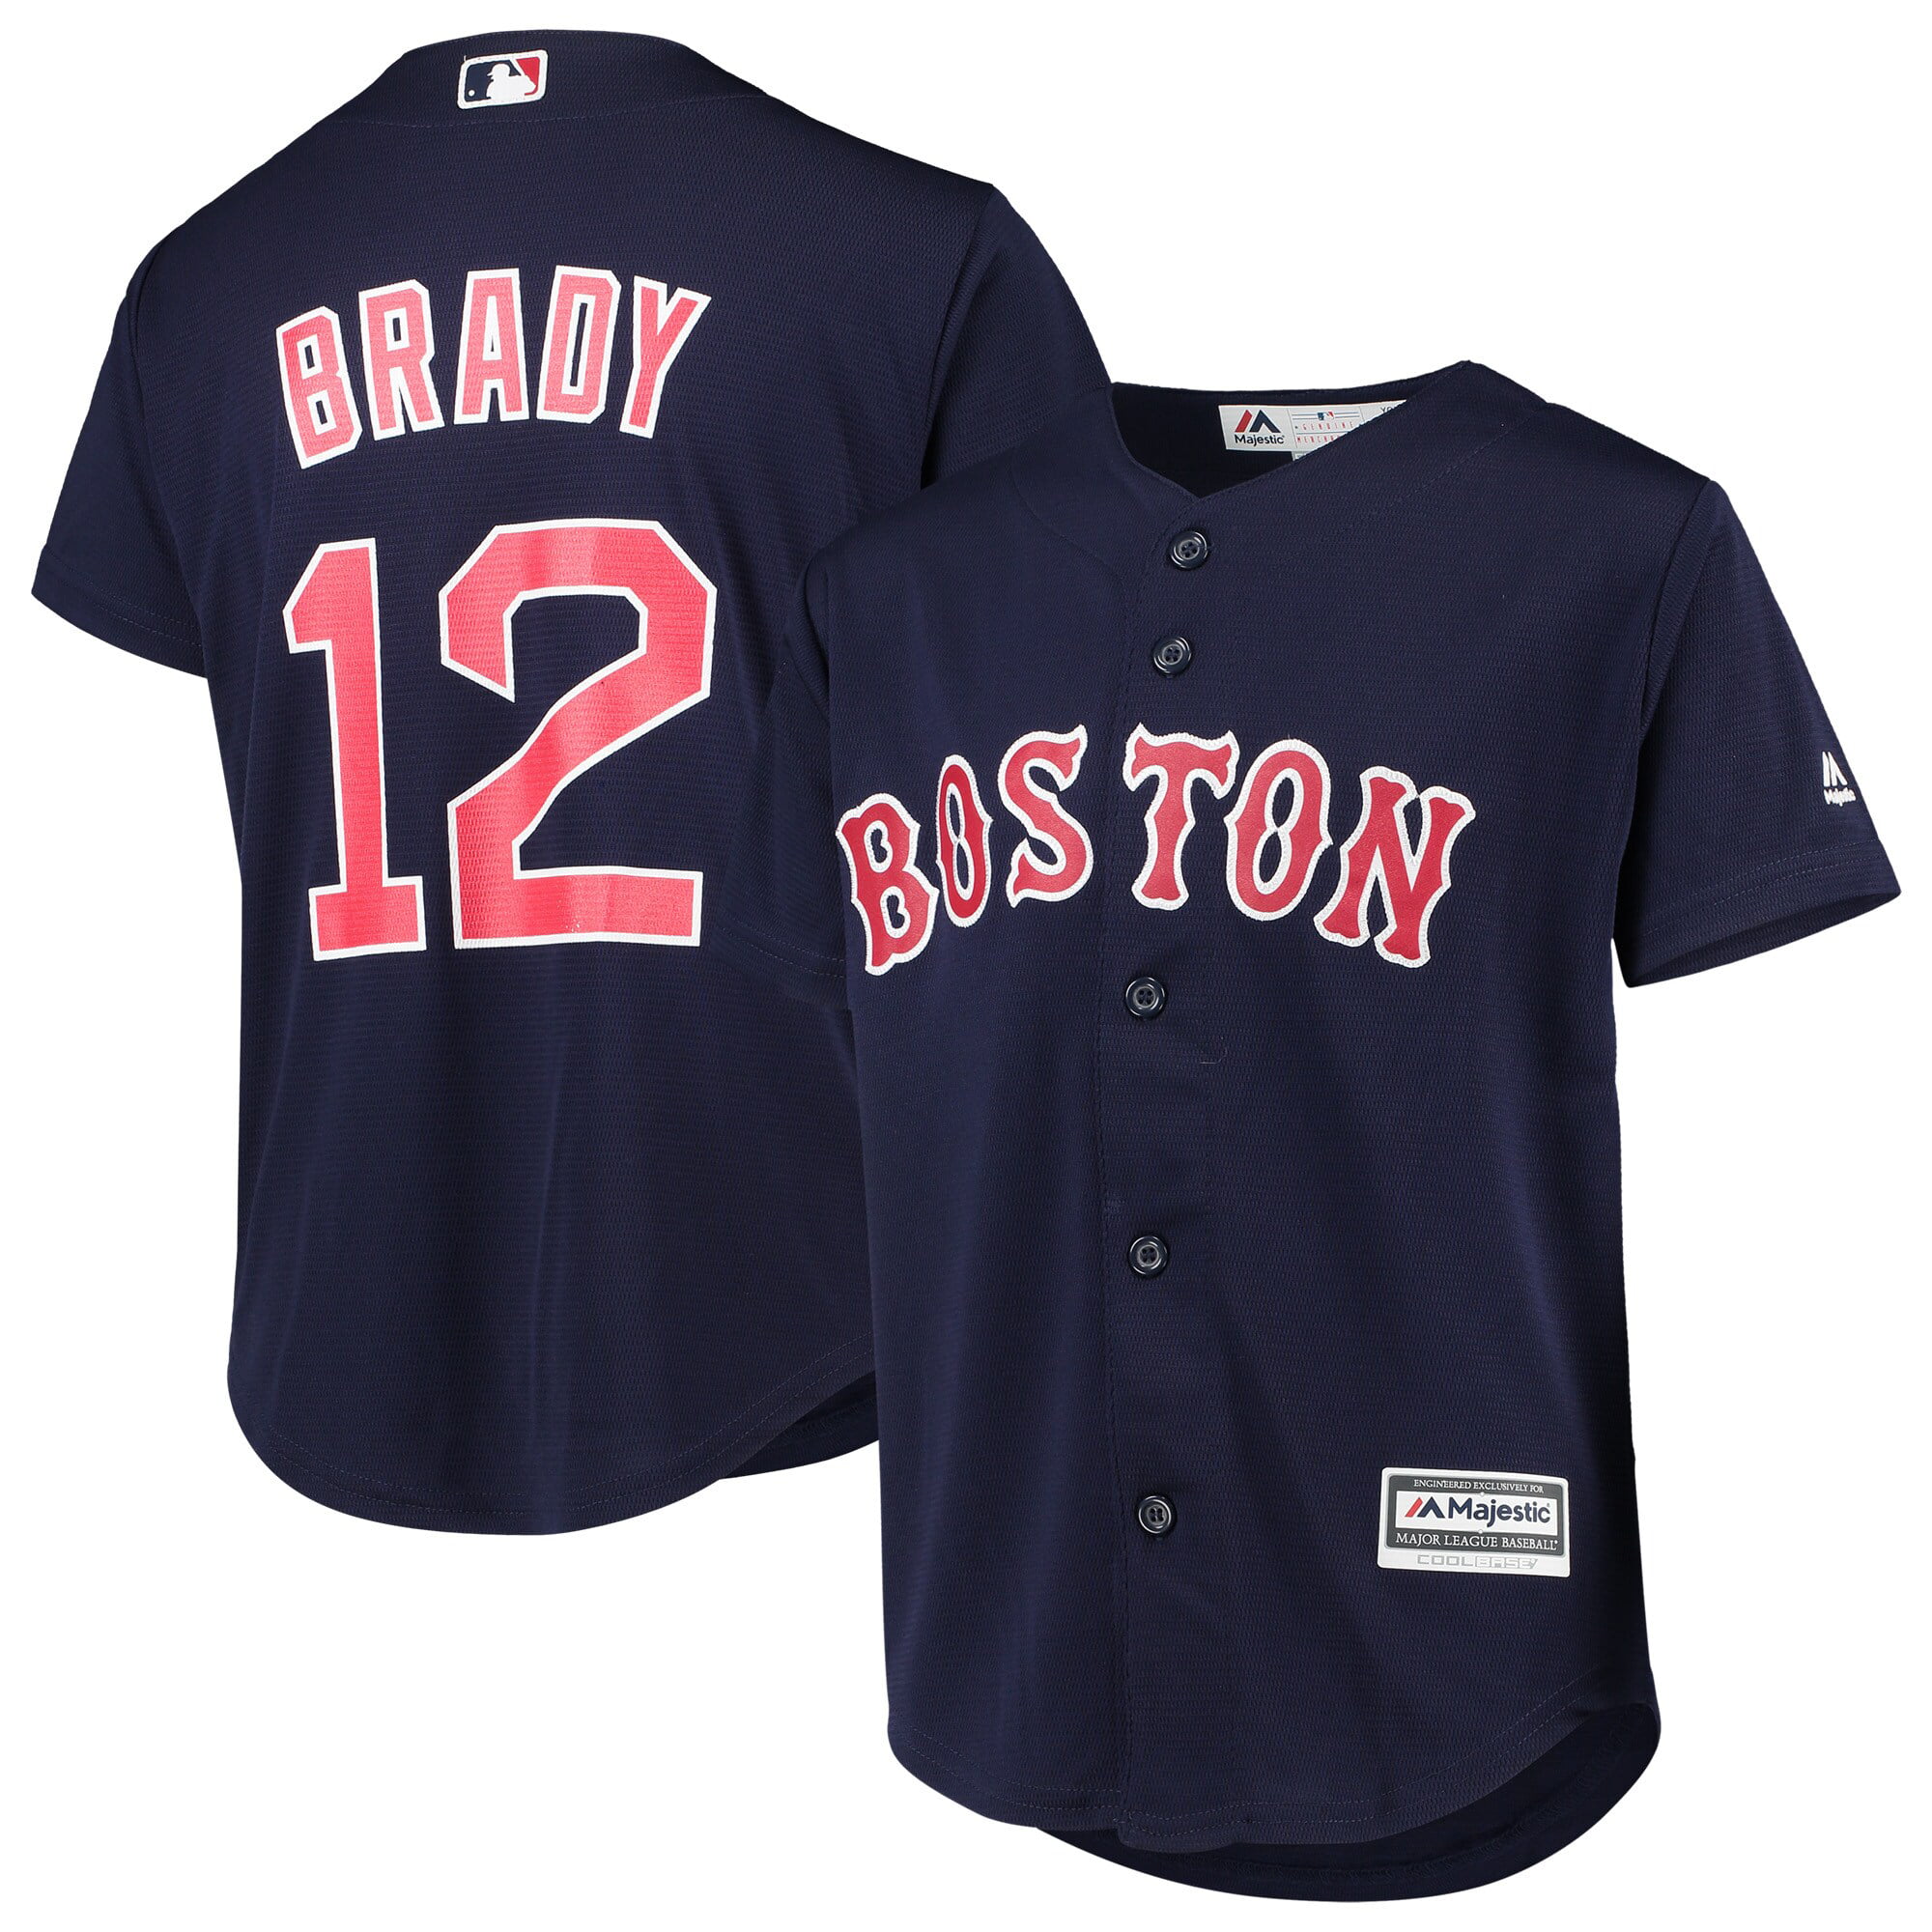 Tom Brady Boston Red Sox Majestic Youth MLB x NFL Player Jersey - Navy - Walmart.com